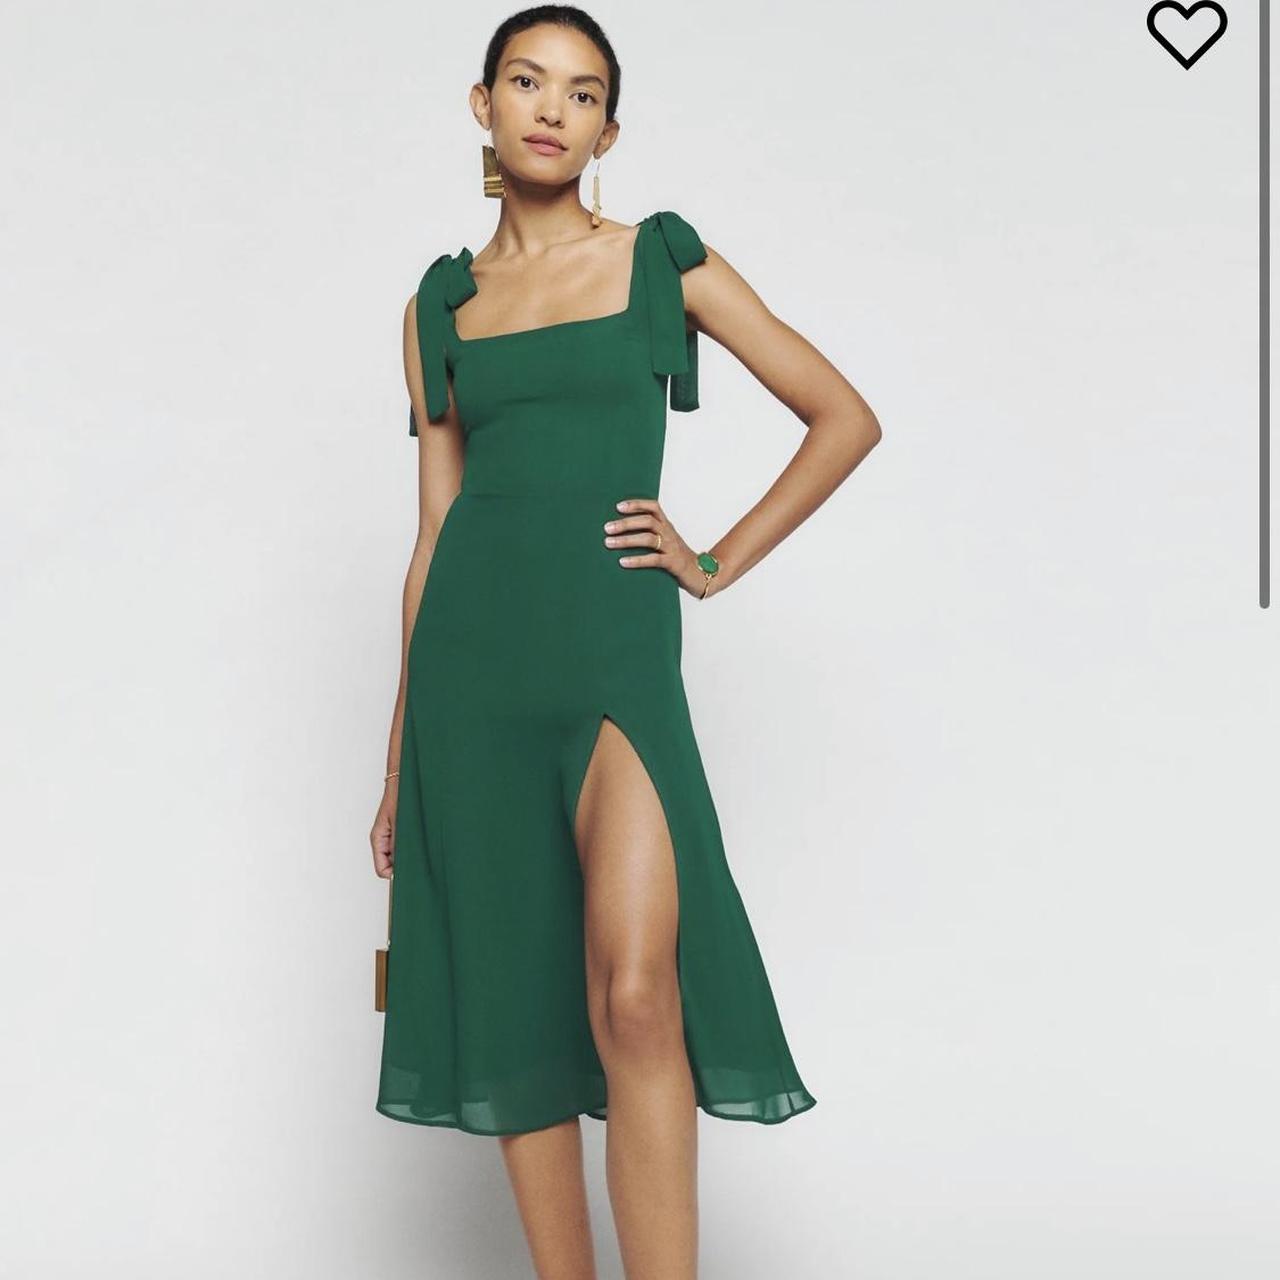 REFORMATION Twilight Dress in Emerald size 4. Worn... - Depop